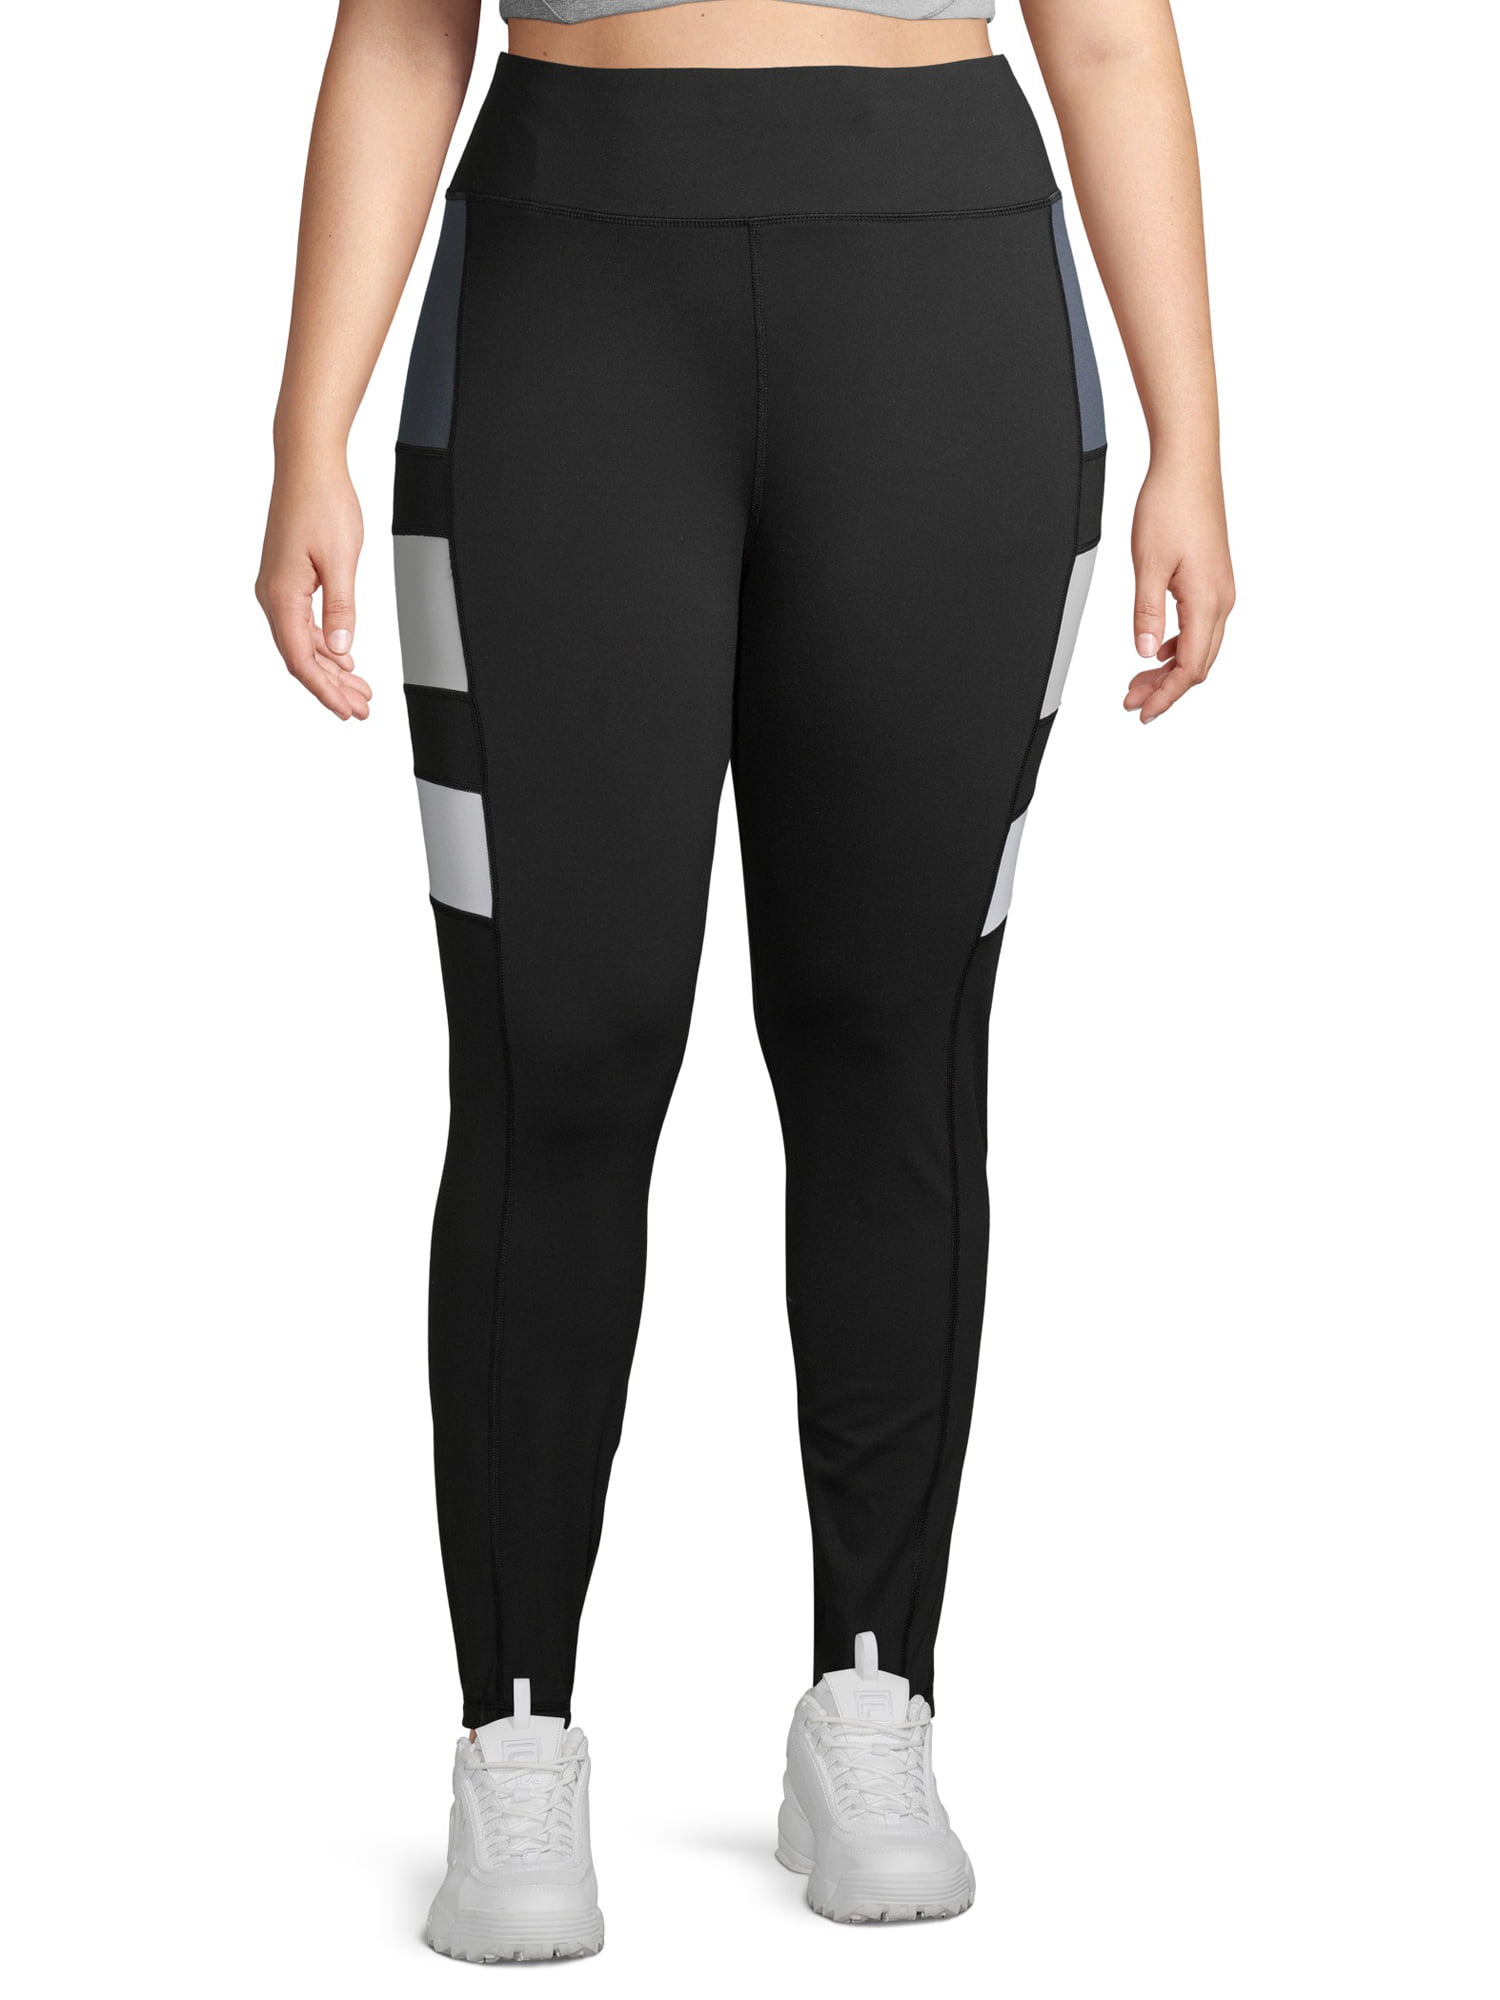 Avia women's active fashion capri leggings black zebra Sz S(4-6